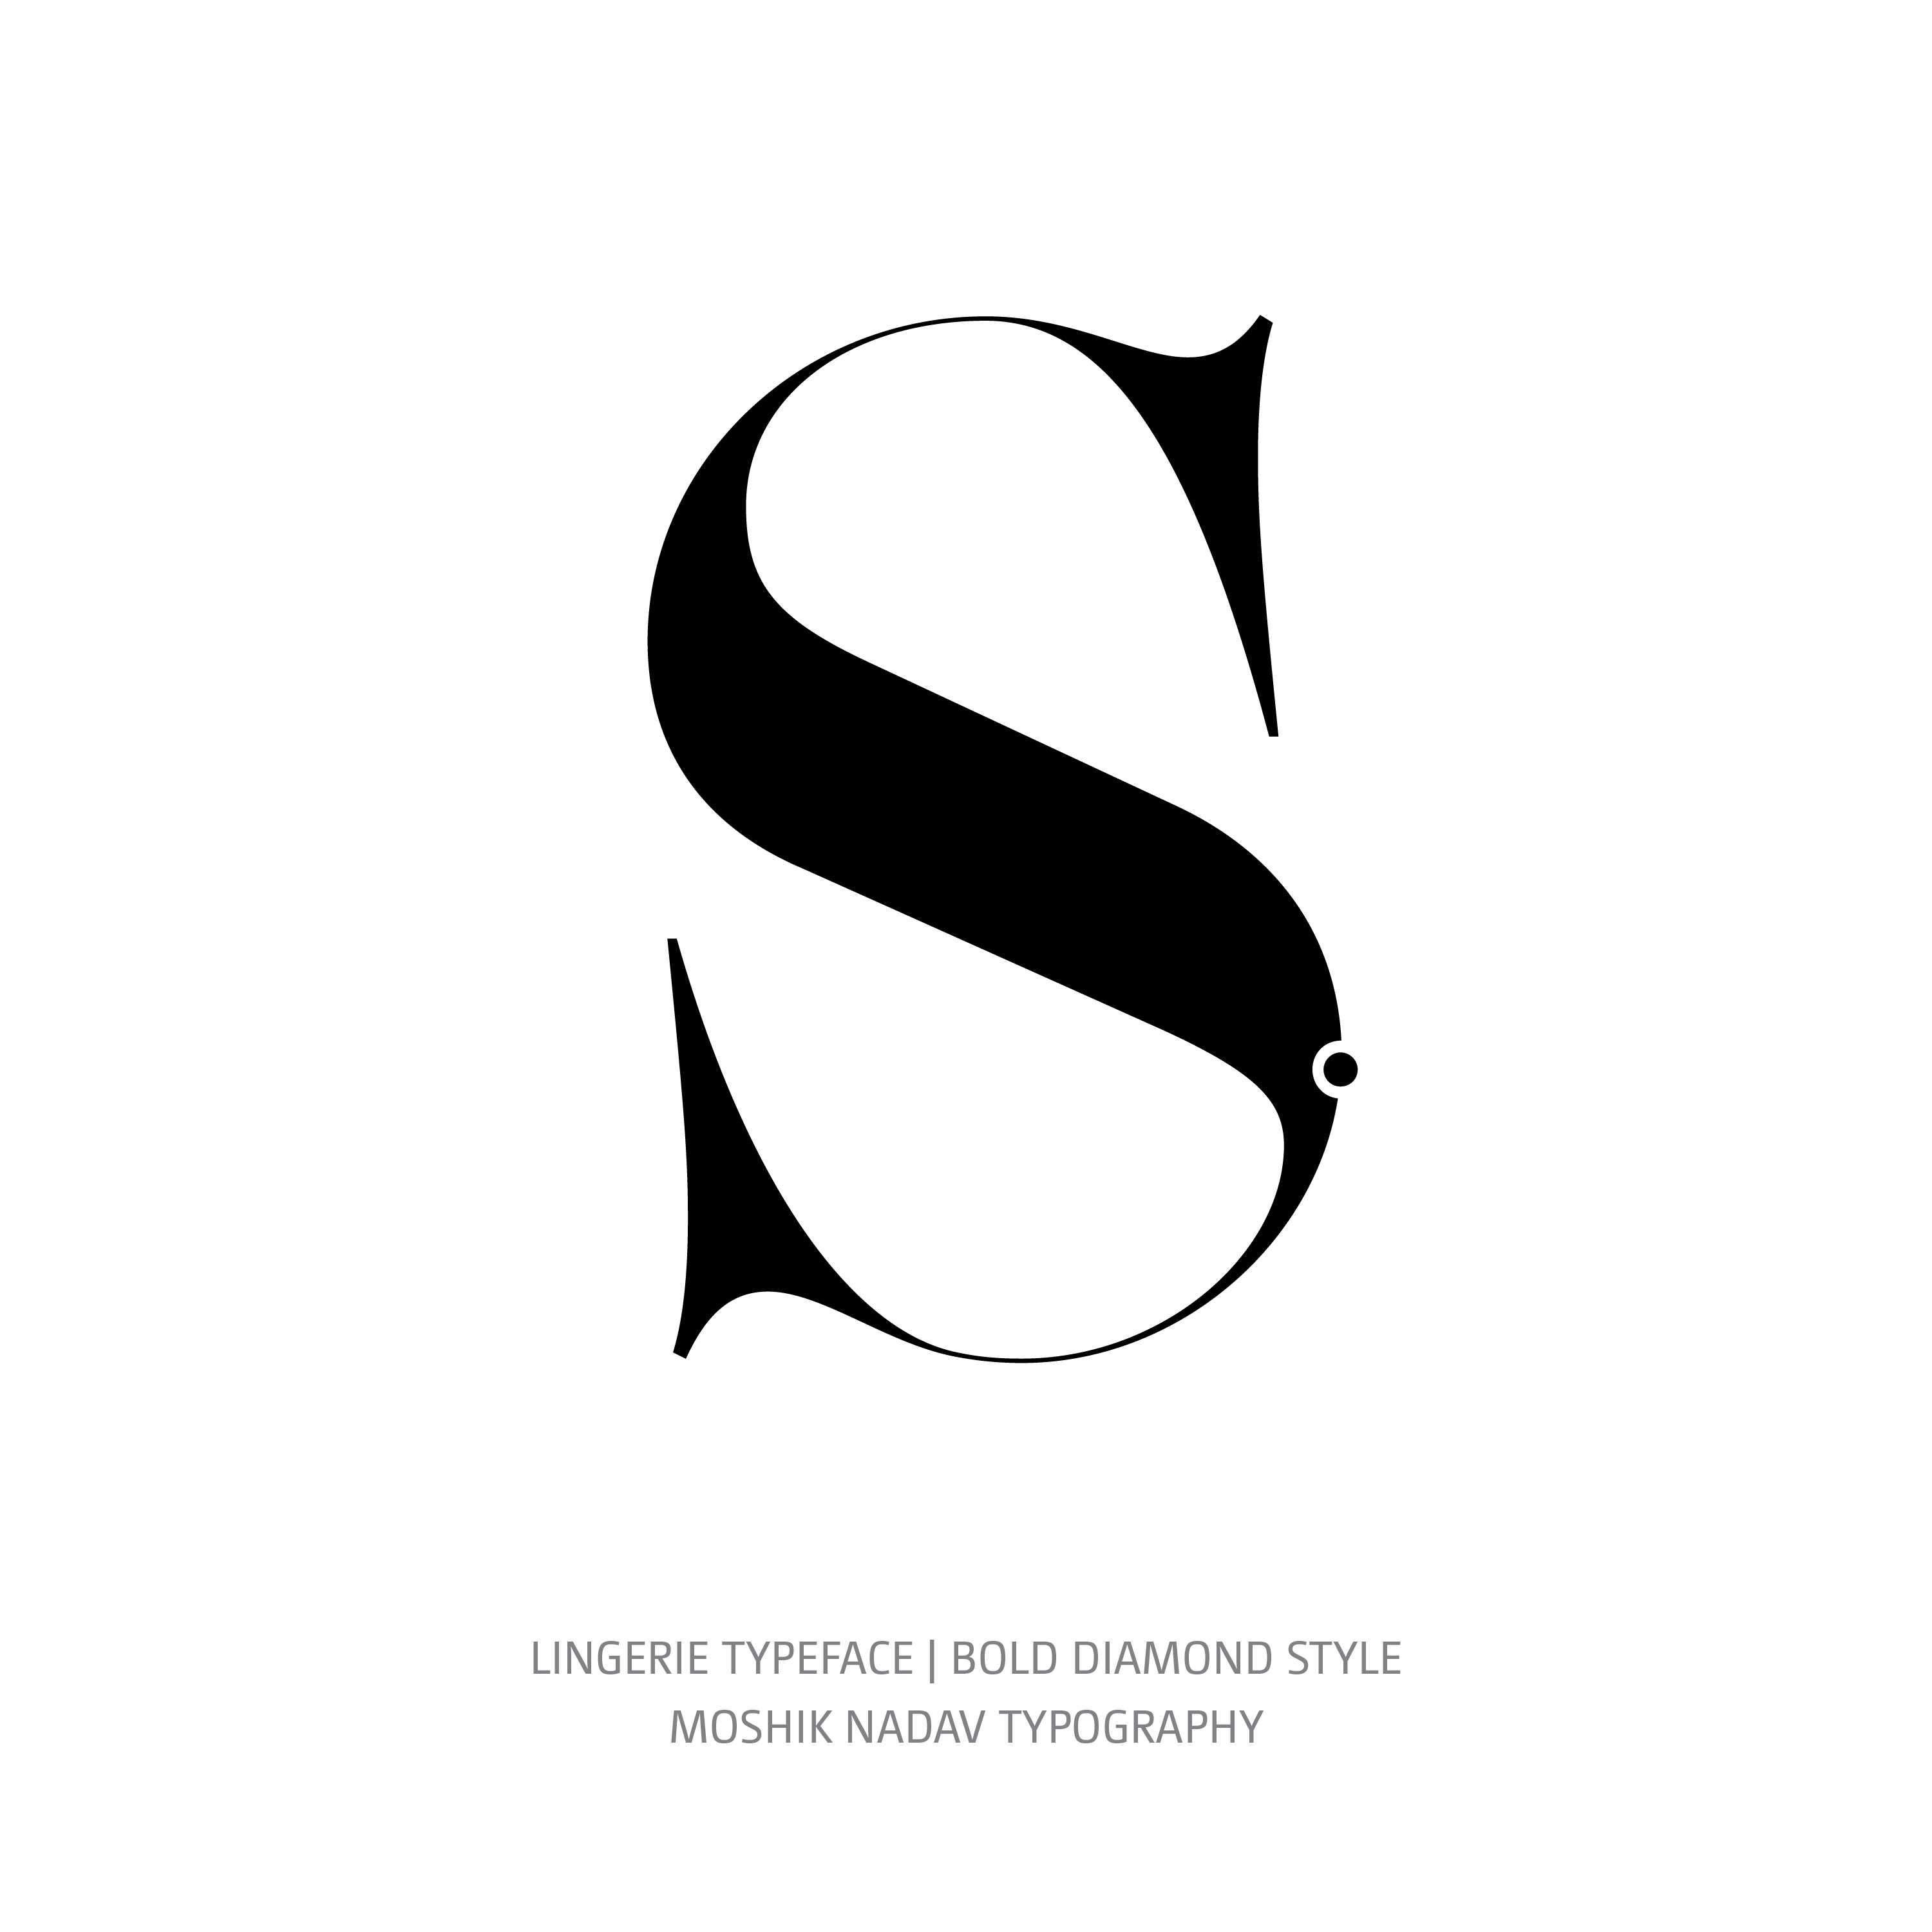 Lingerie Typeface Bold Diamond S